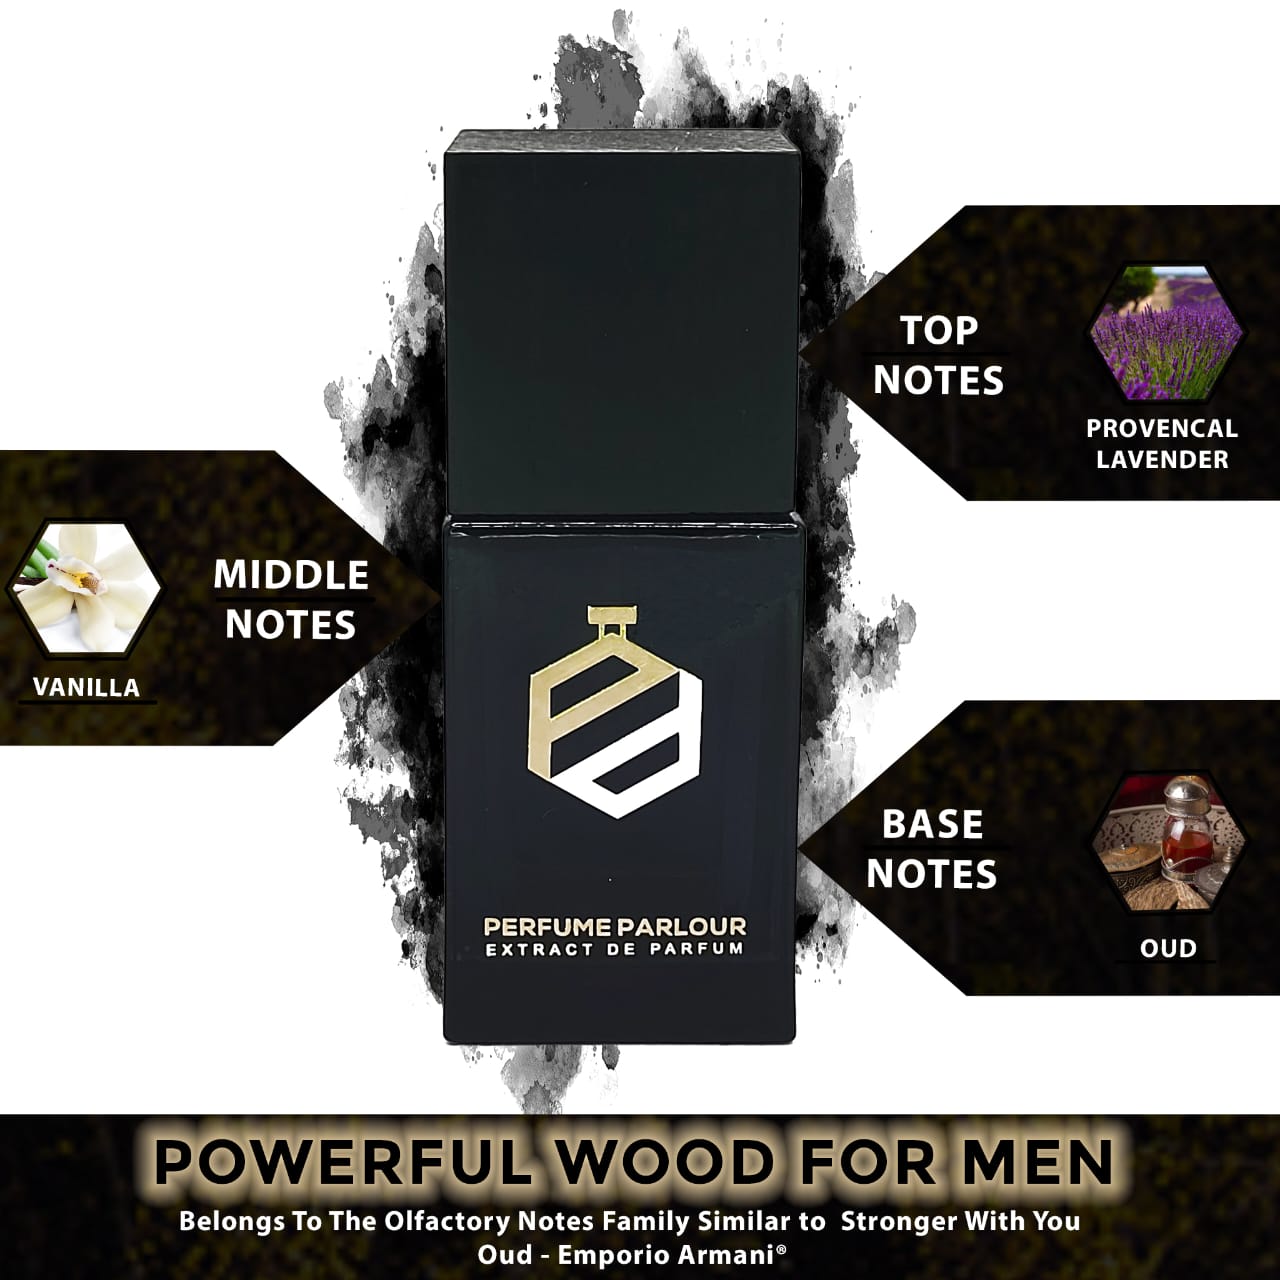 Powerful Wood For Men 1462 - Perfume Parlour